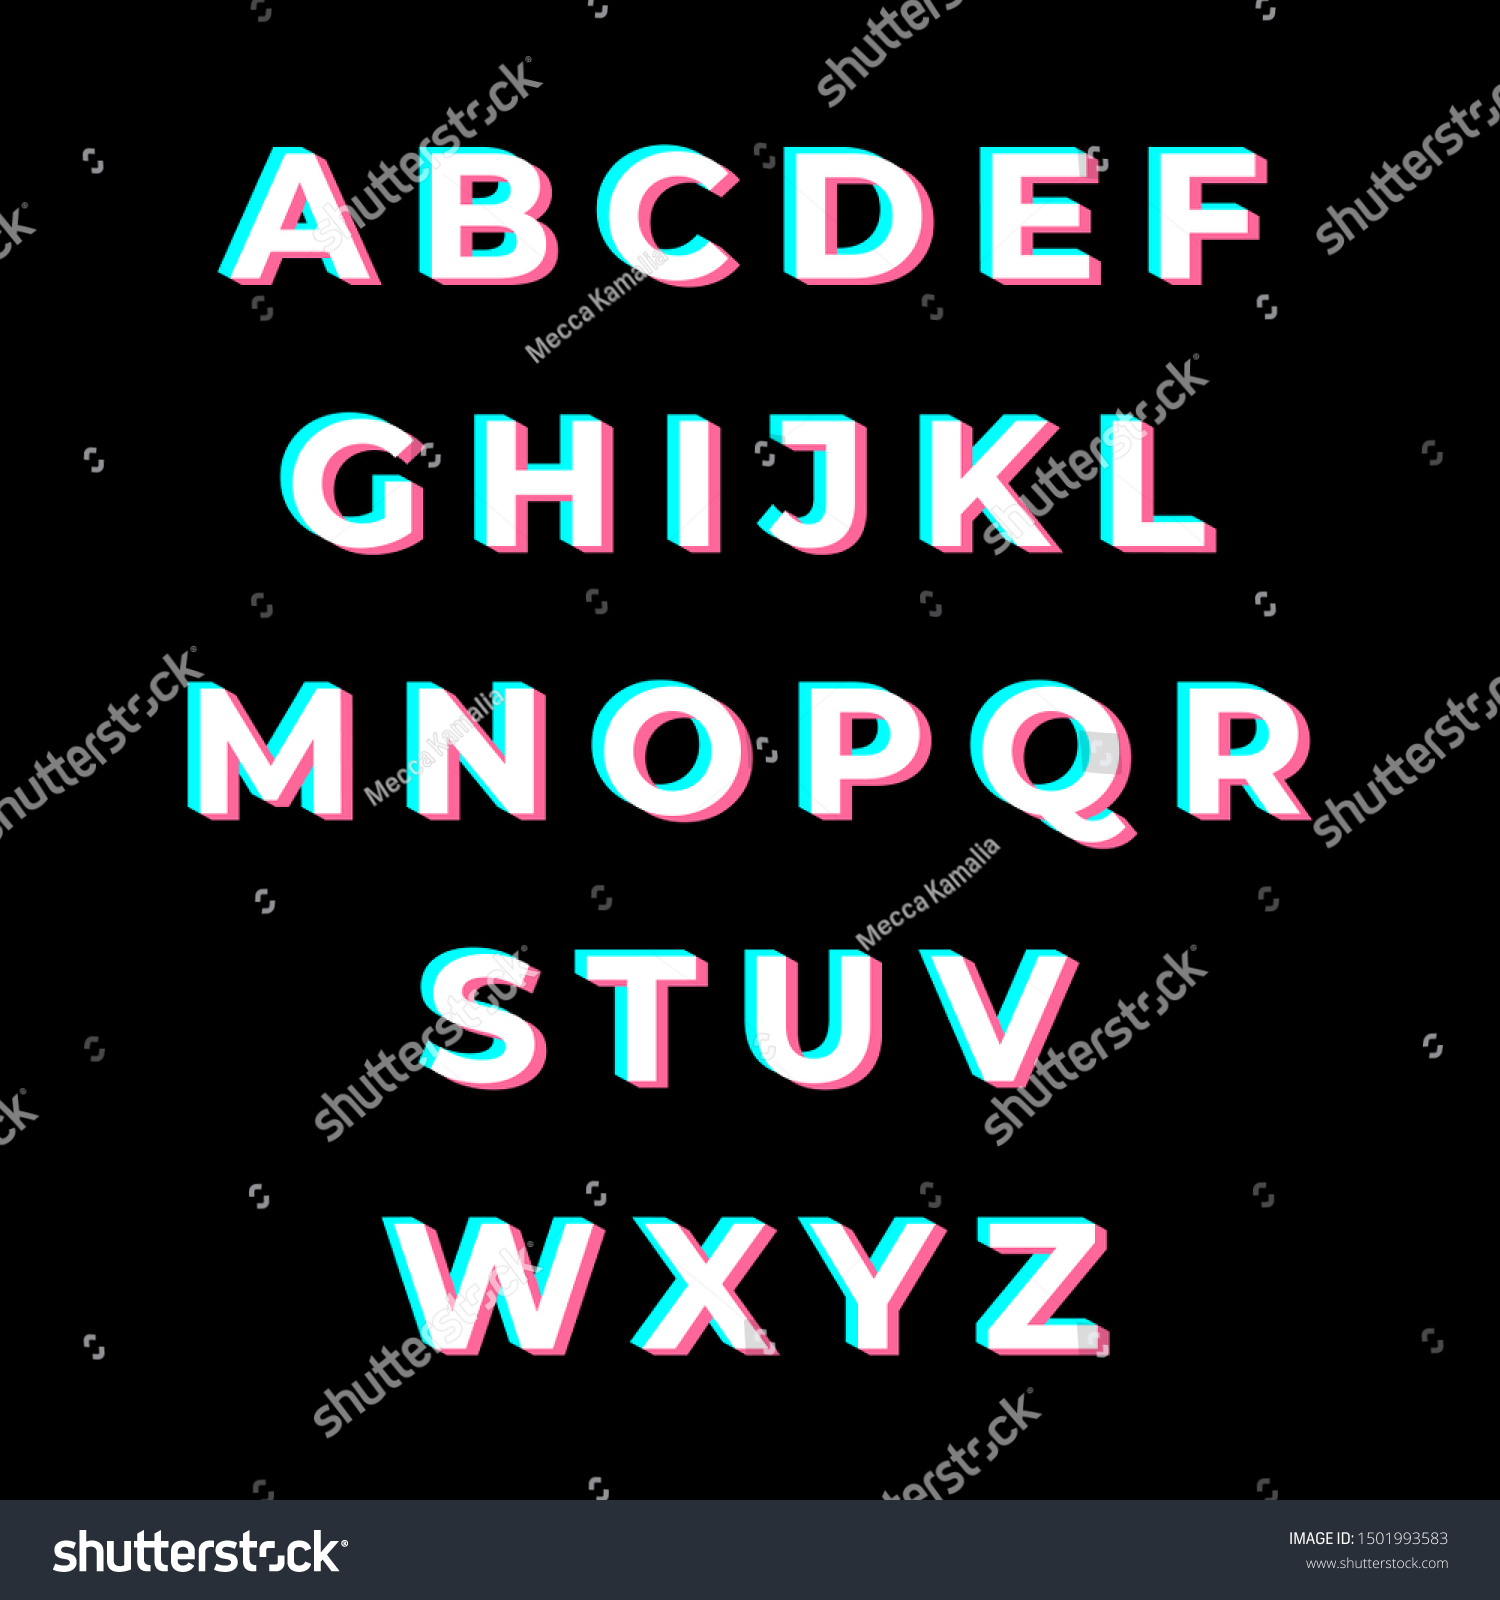 Tiktok Font Style Download : Tiktok tik tok font logo alphabet banner ...